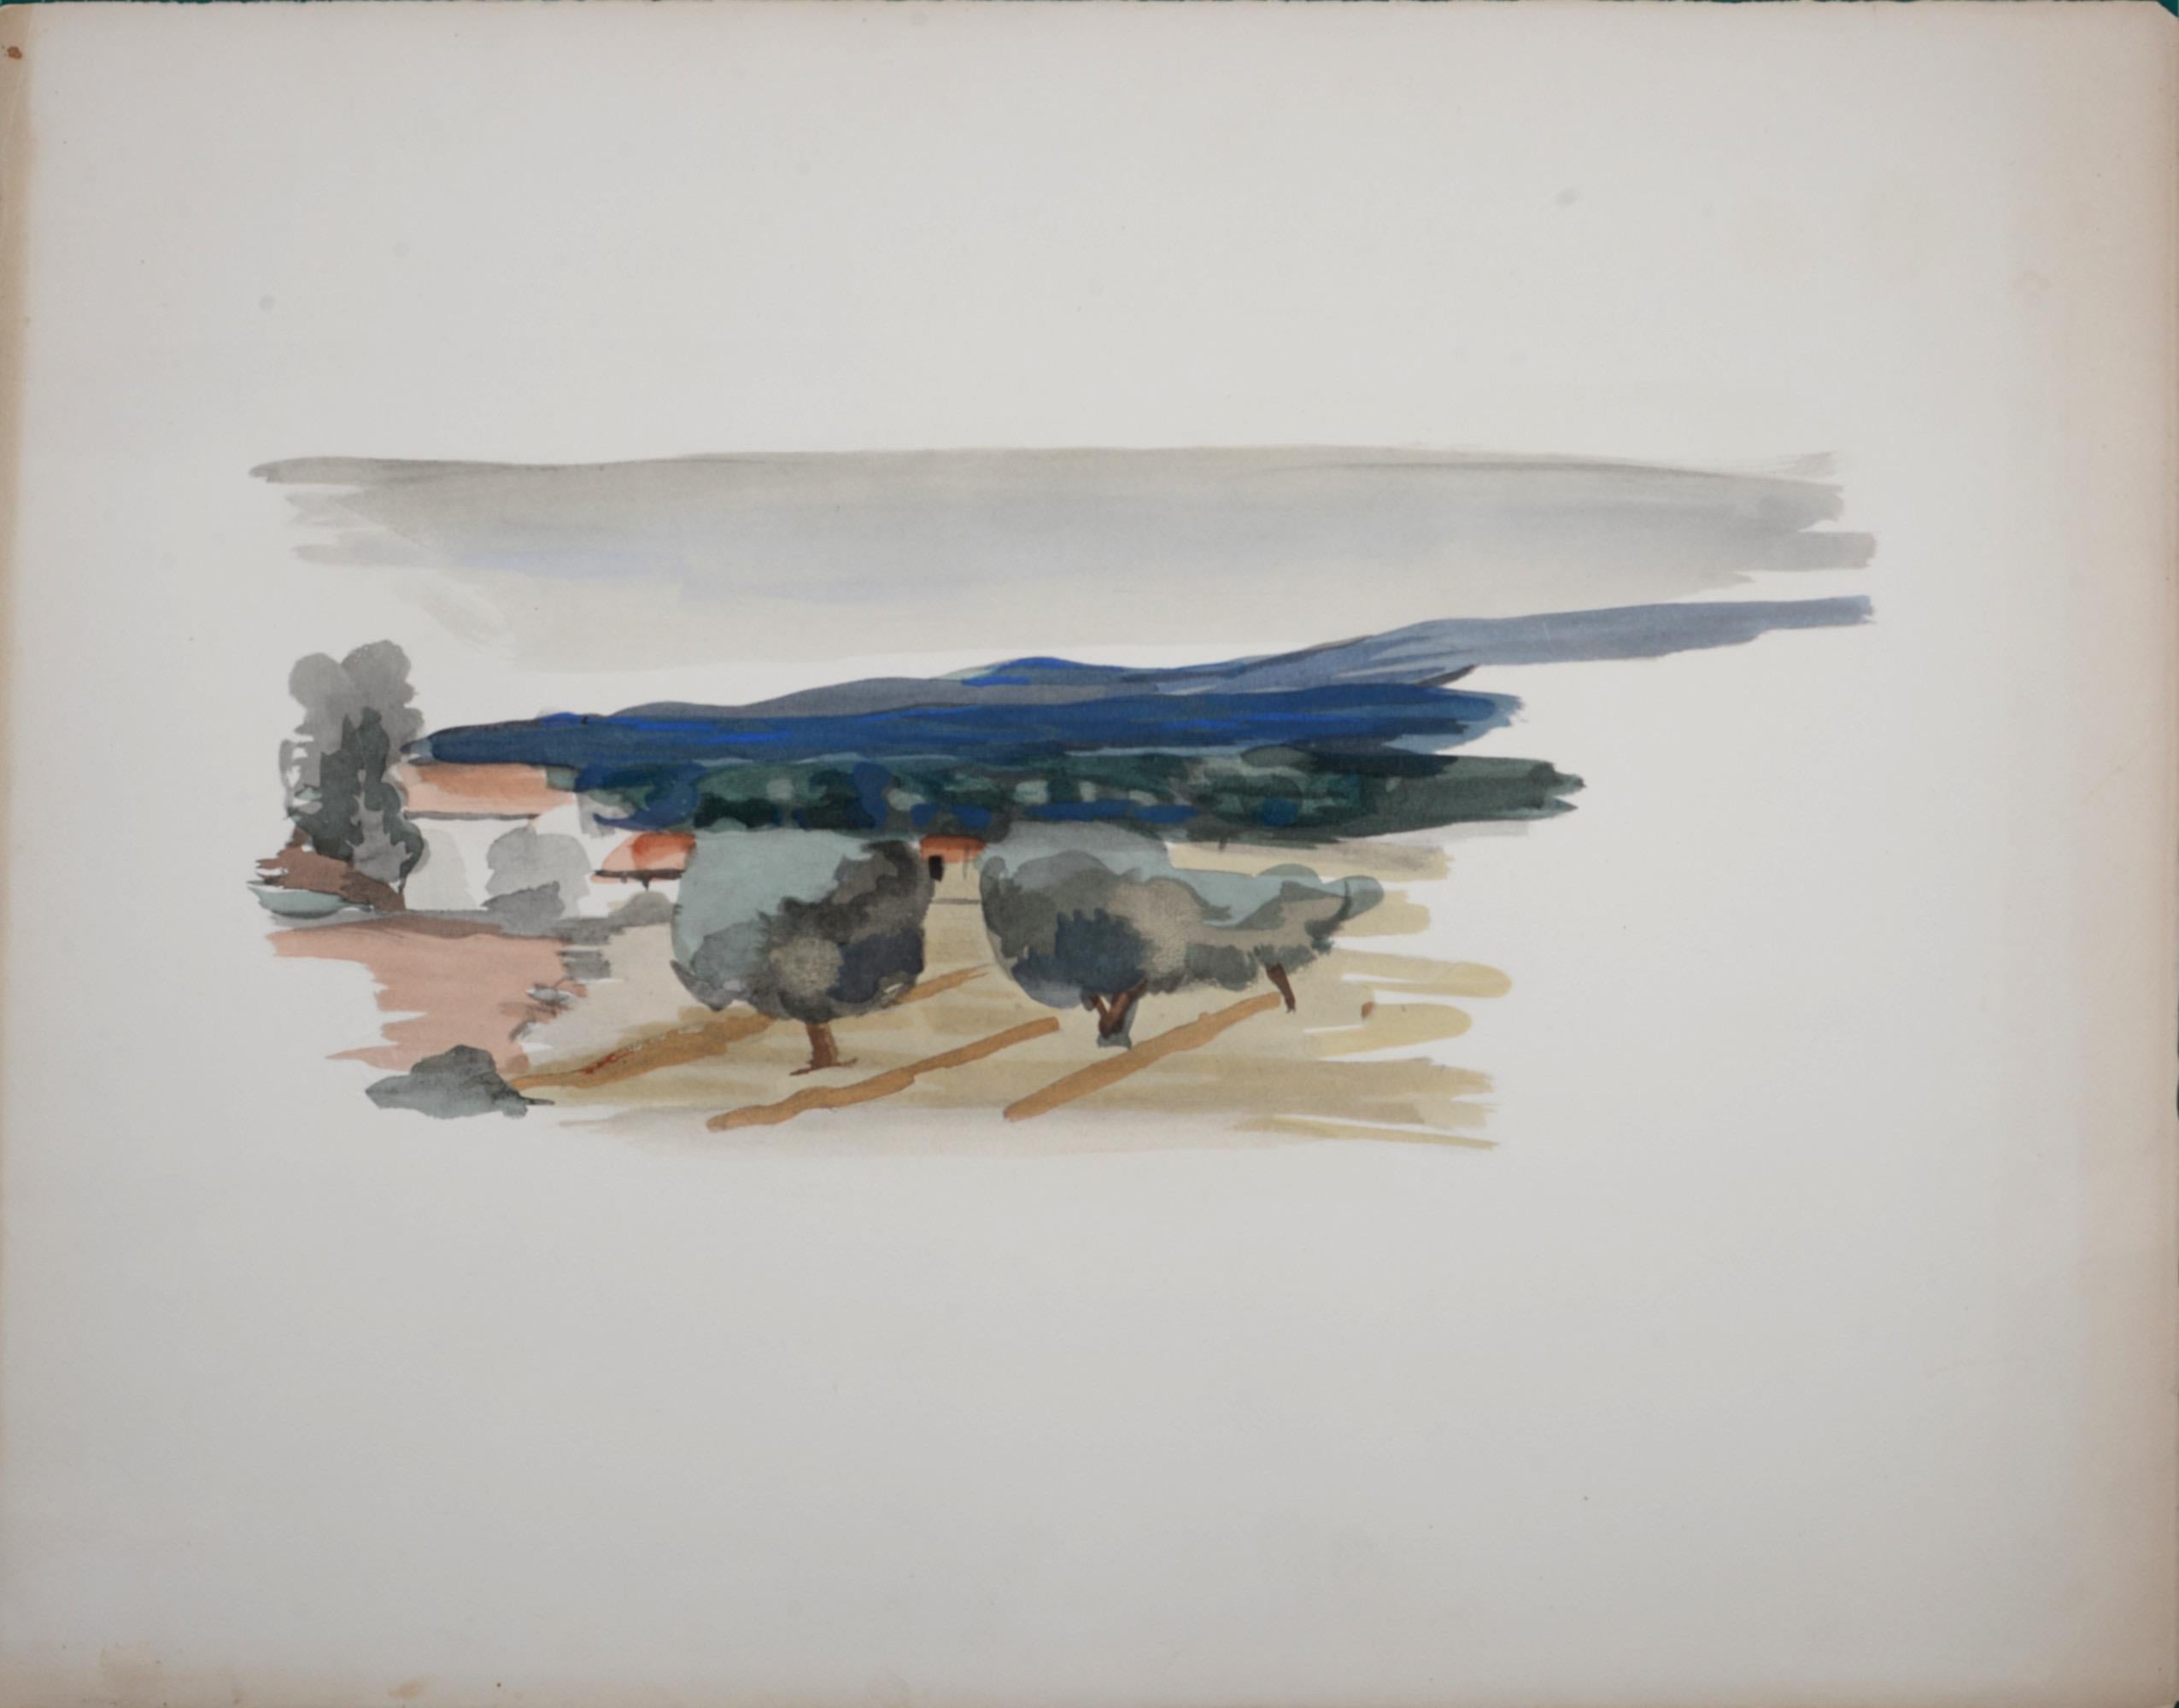 Derain, Paysage, Dix Reproductions (after) - Modern Print by André Derain